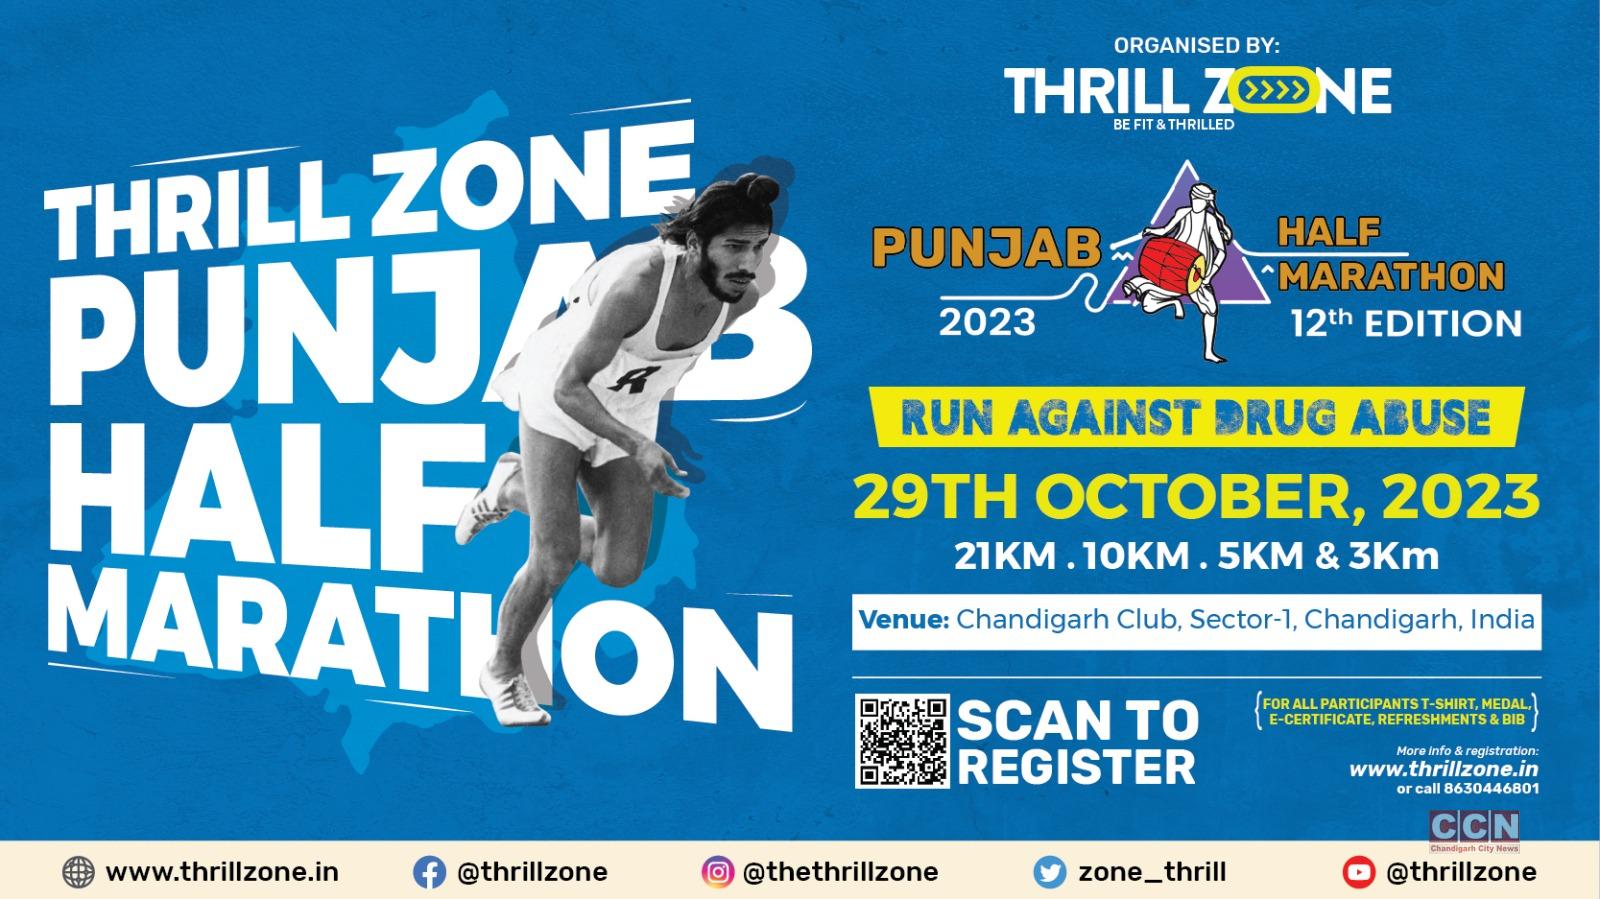 Thrill Zone to organise 12th edition of the Punjab Half Marathon on October 29